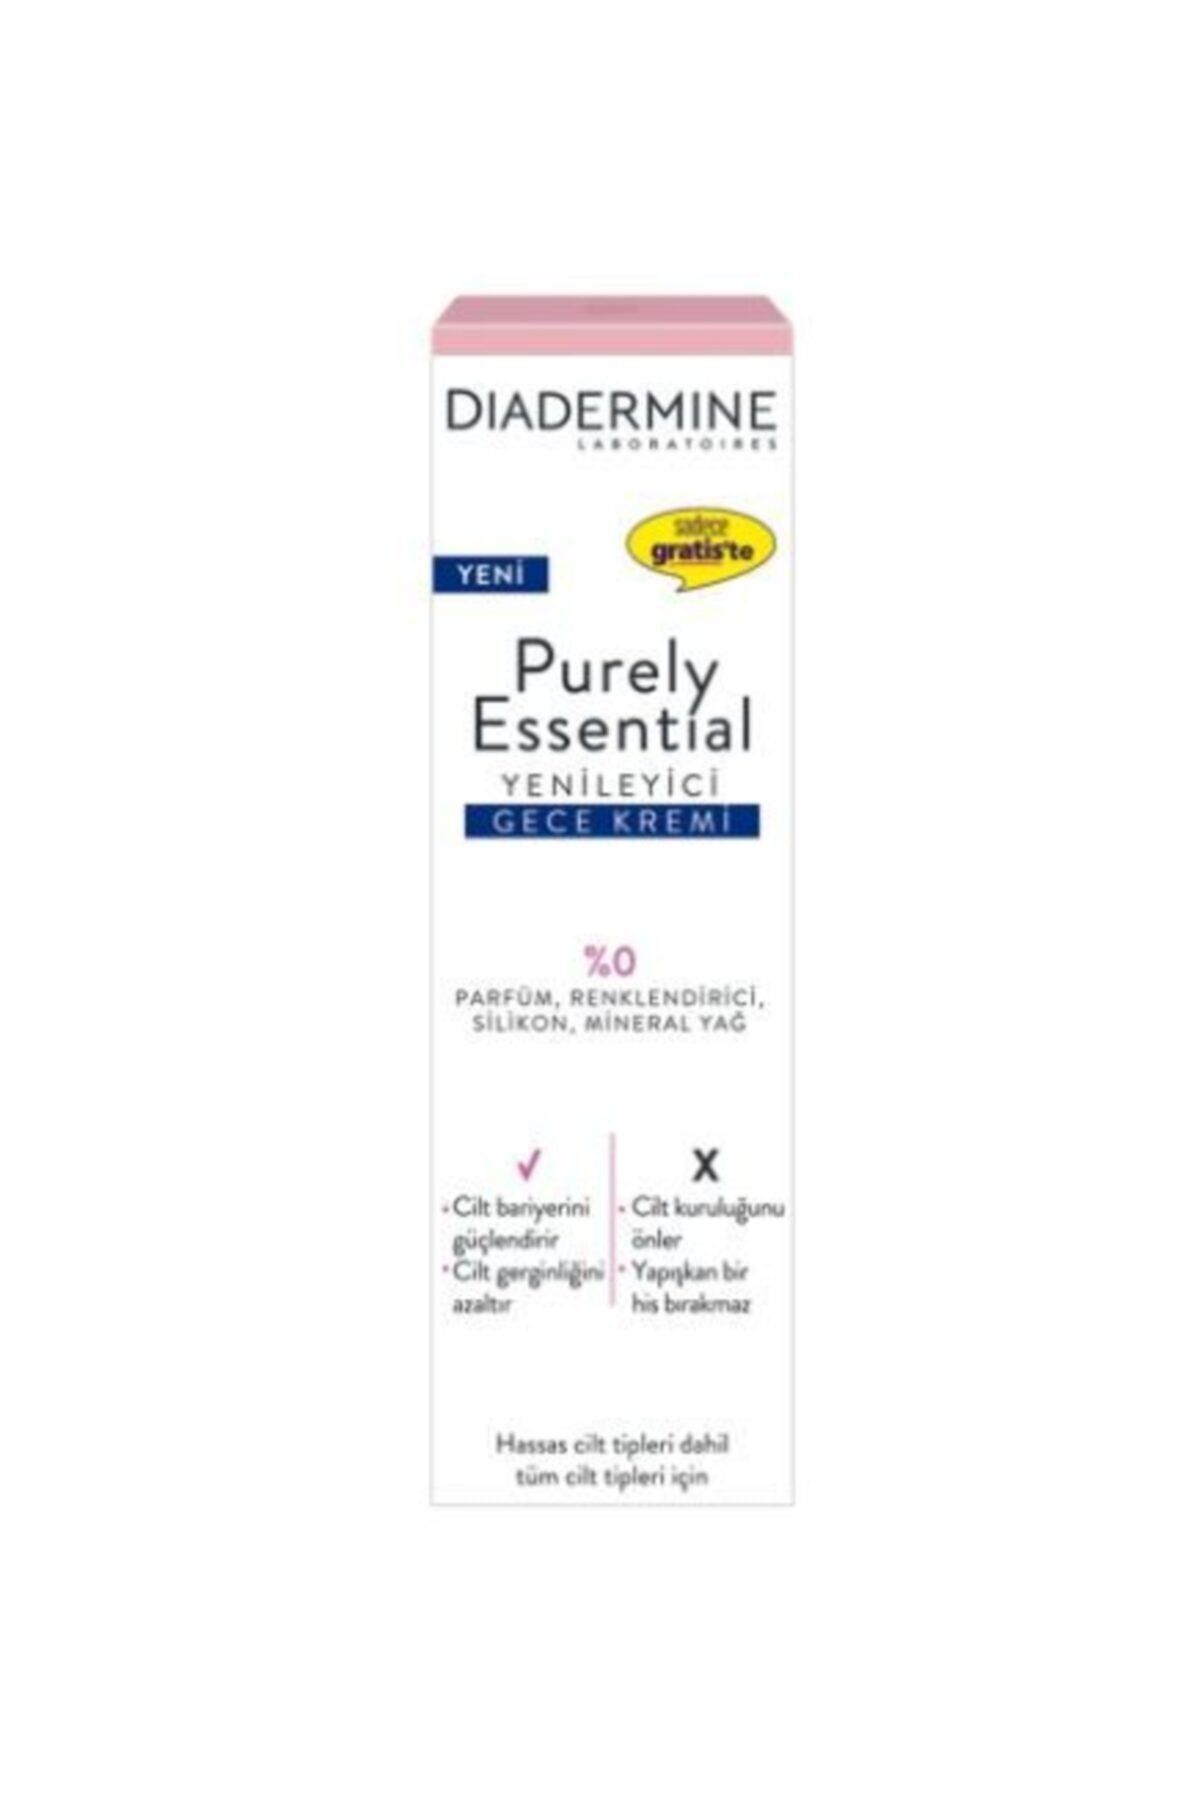 Diadermine Purely Essential Yenileyici Gece Kremi 40 ml 9889445646465465